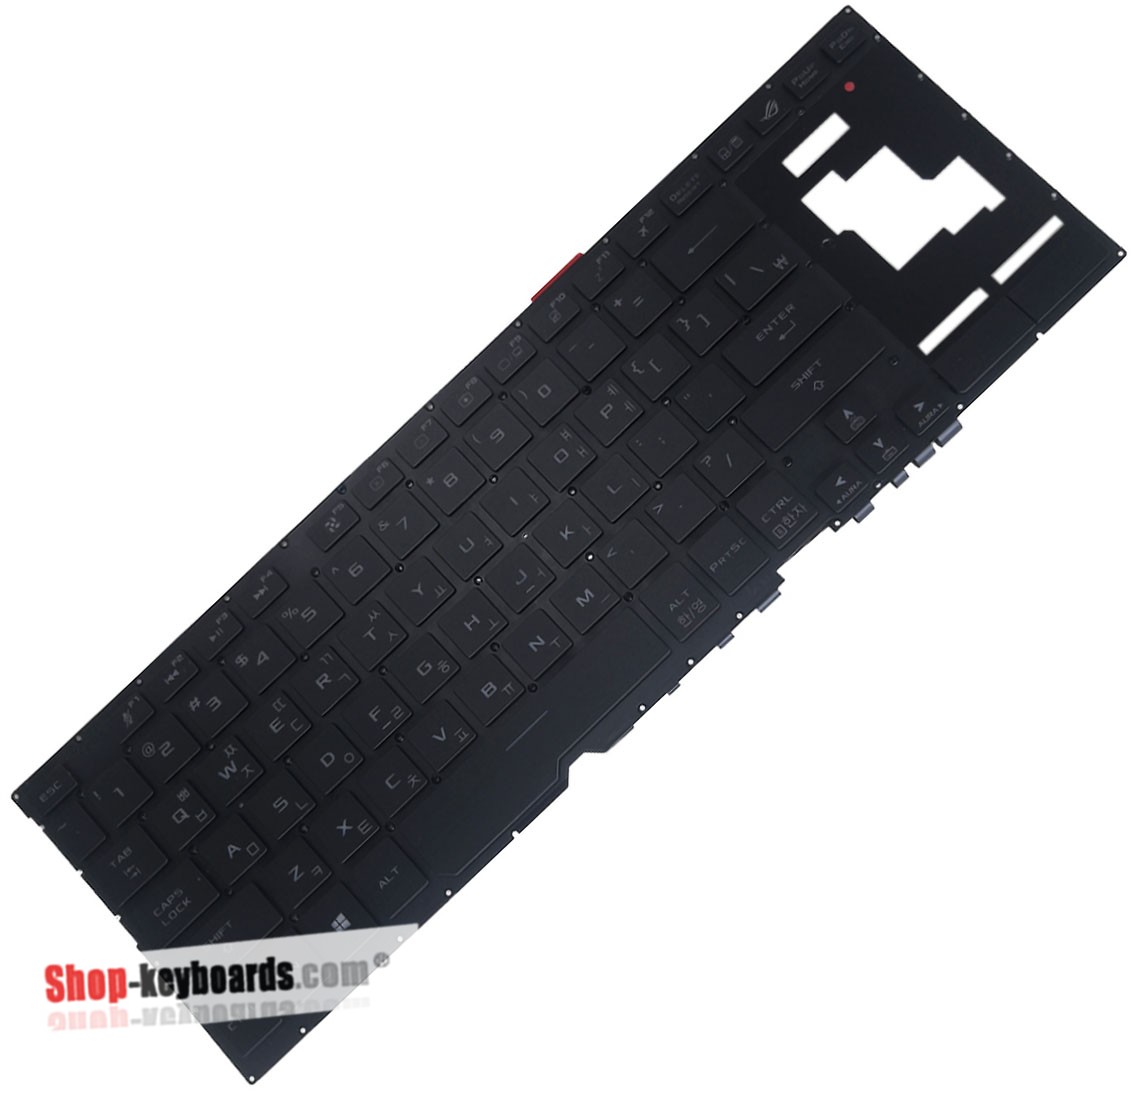 Asus GX701GX Keyboard replacement